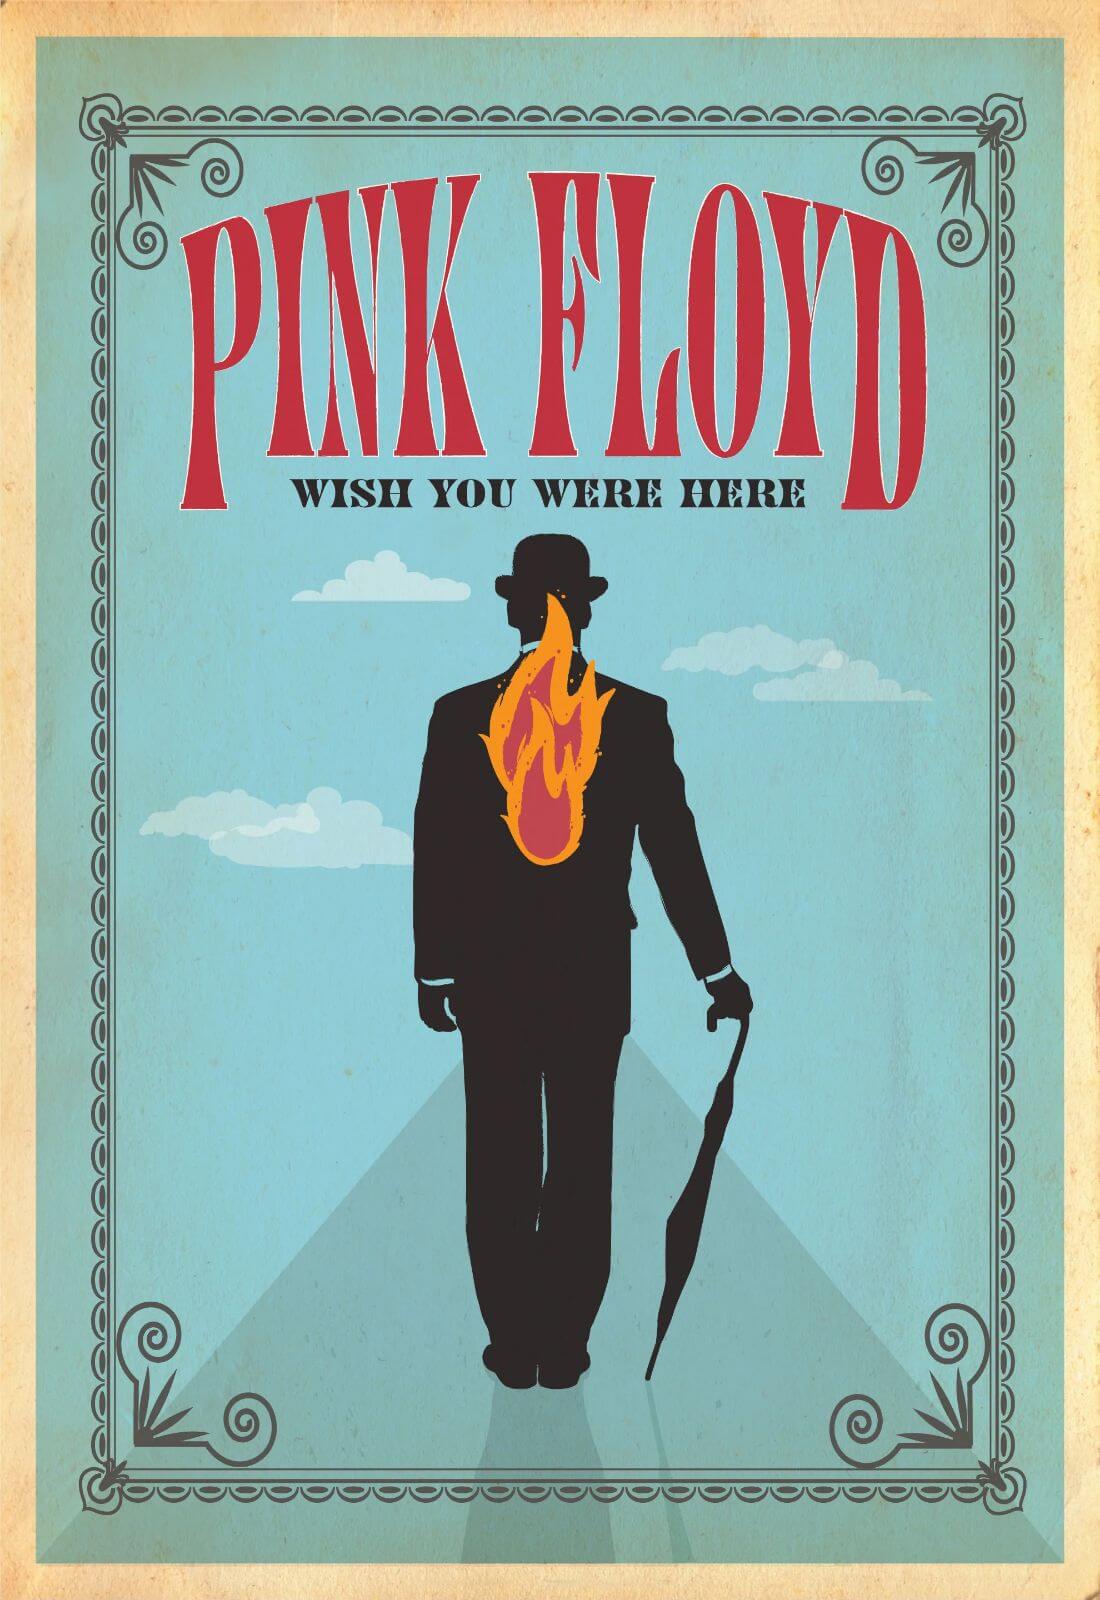 Listening to Pink Floyd 'Wish You Were Here' - Classic Album Sundays